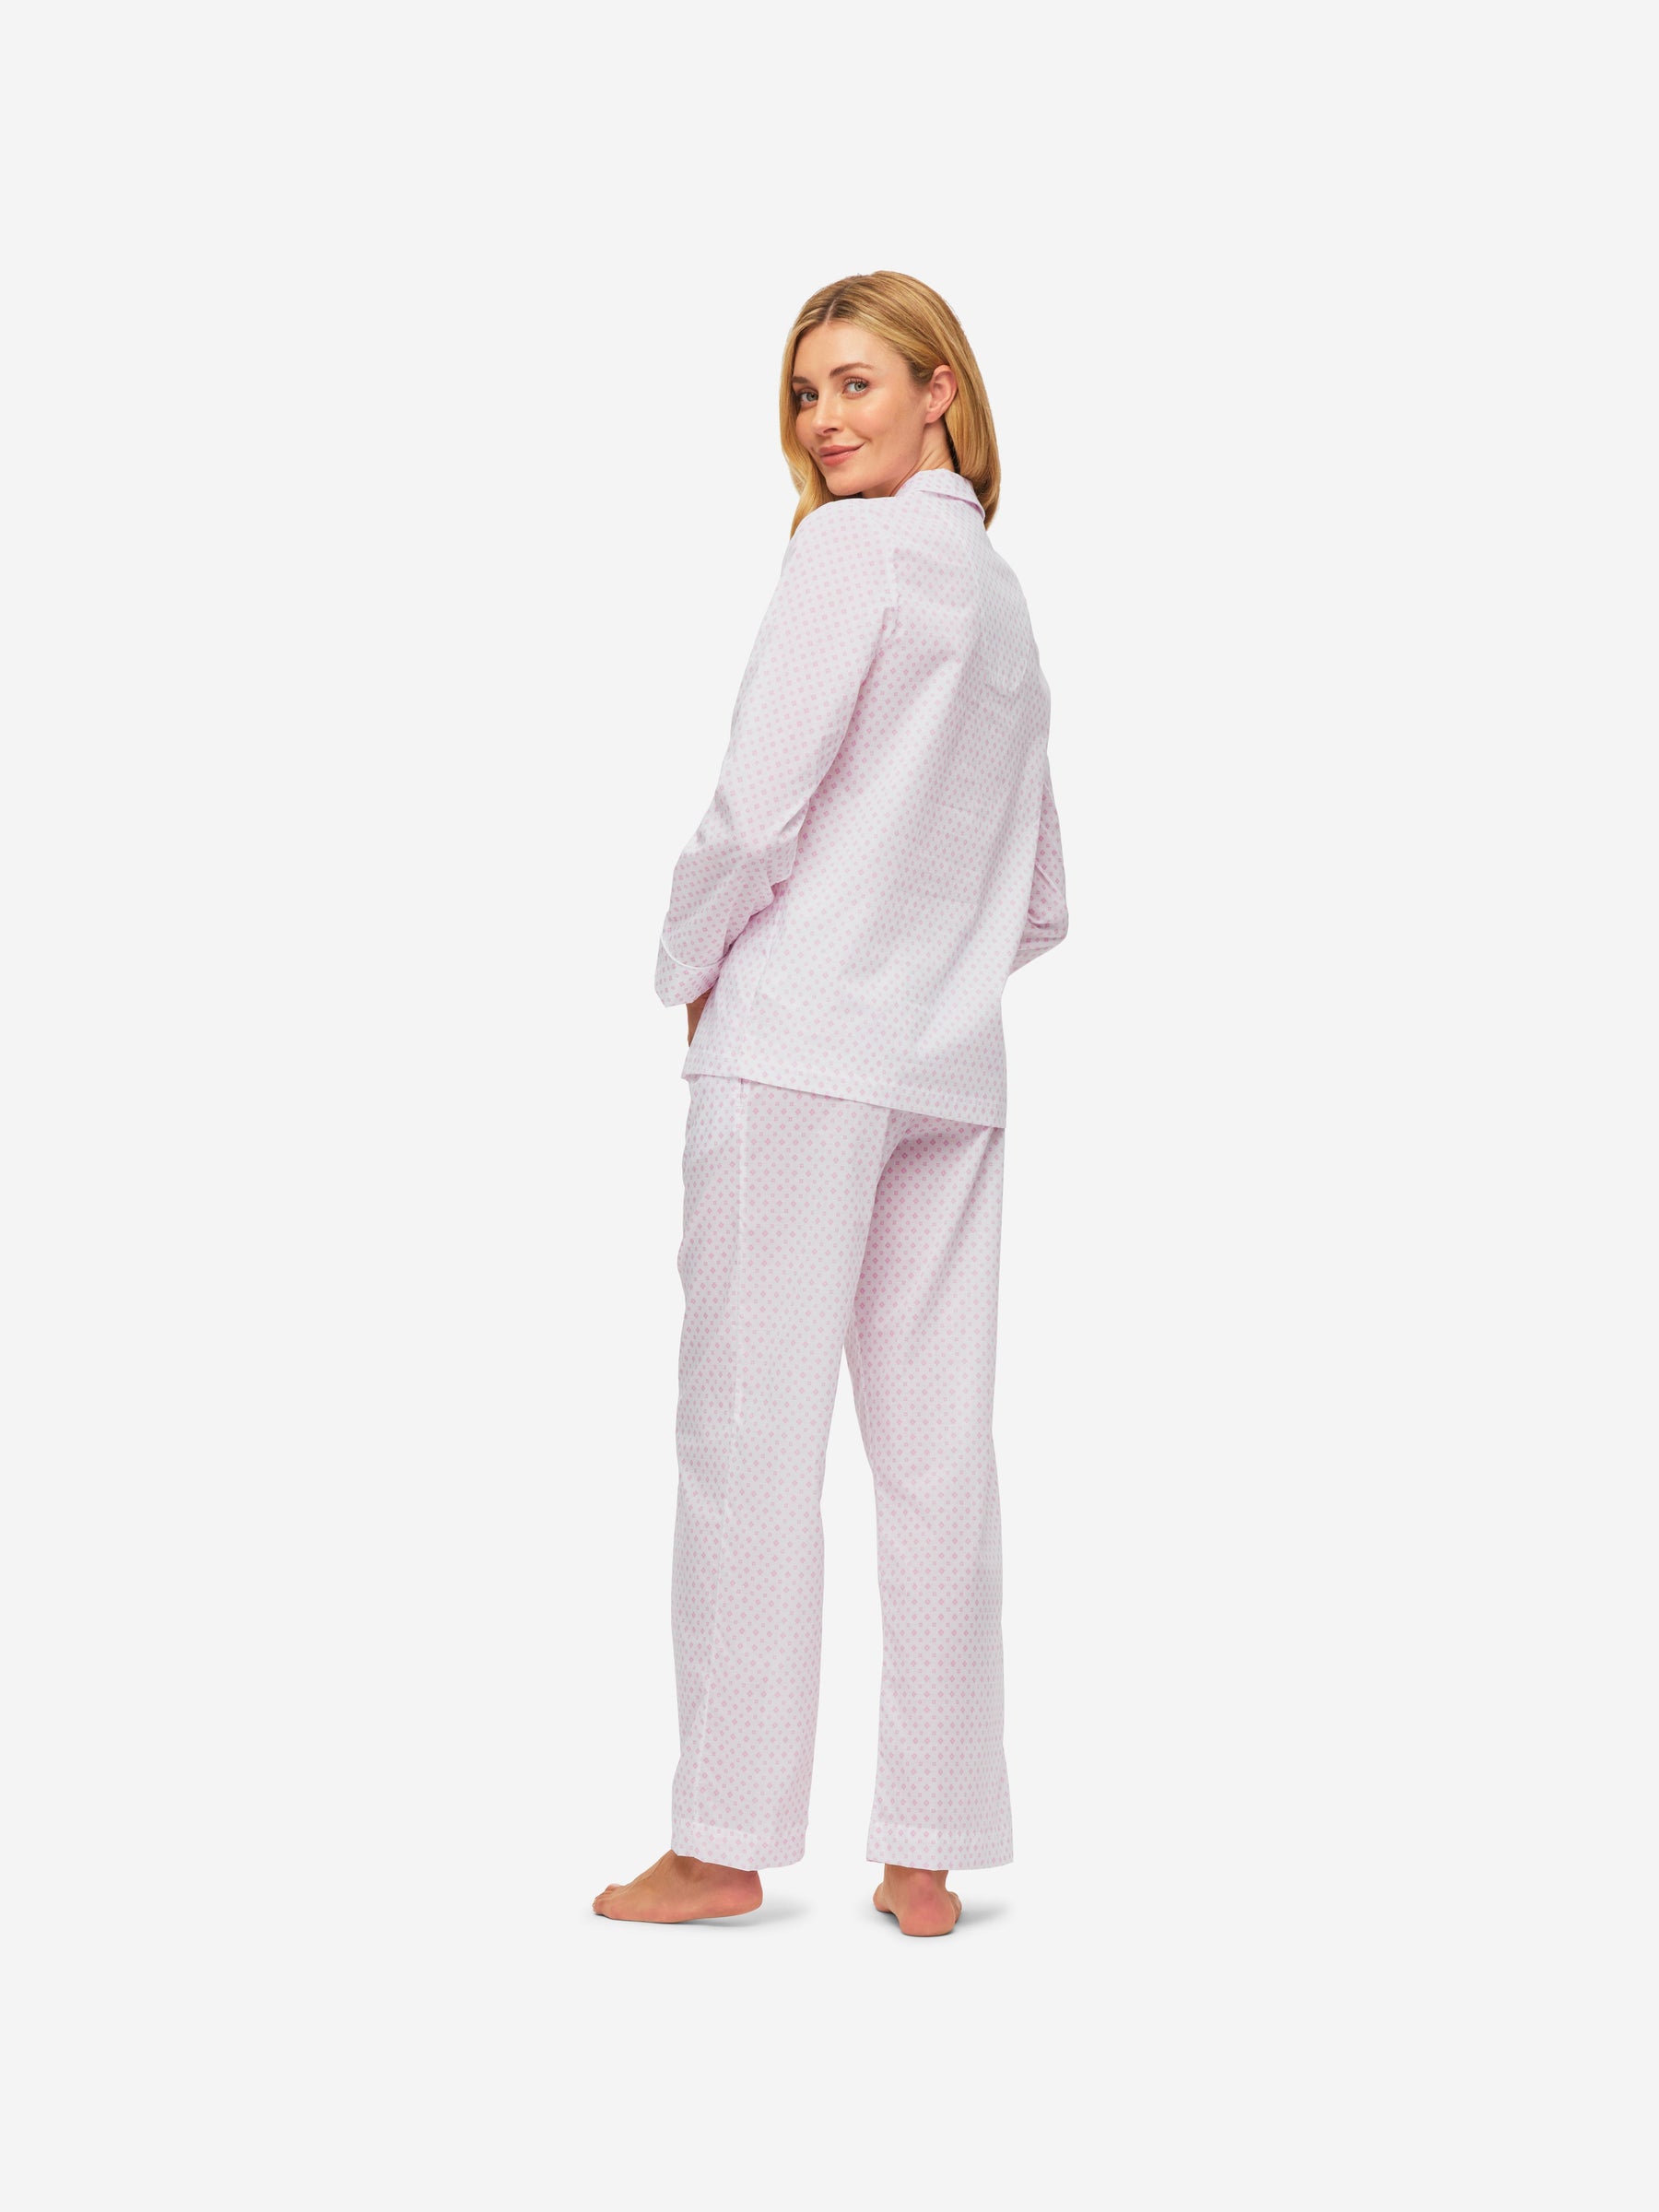 Women's Pyjamas Nelson 92 Cotton Batiste Pink